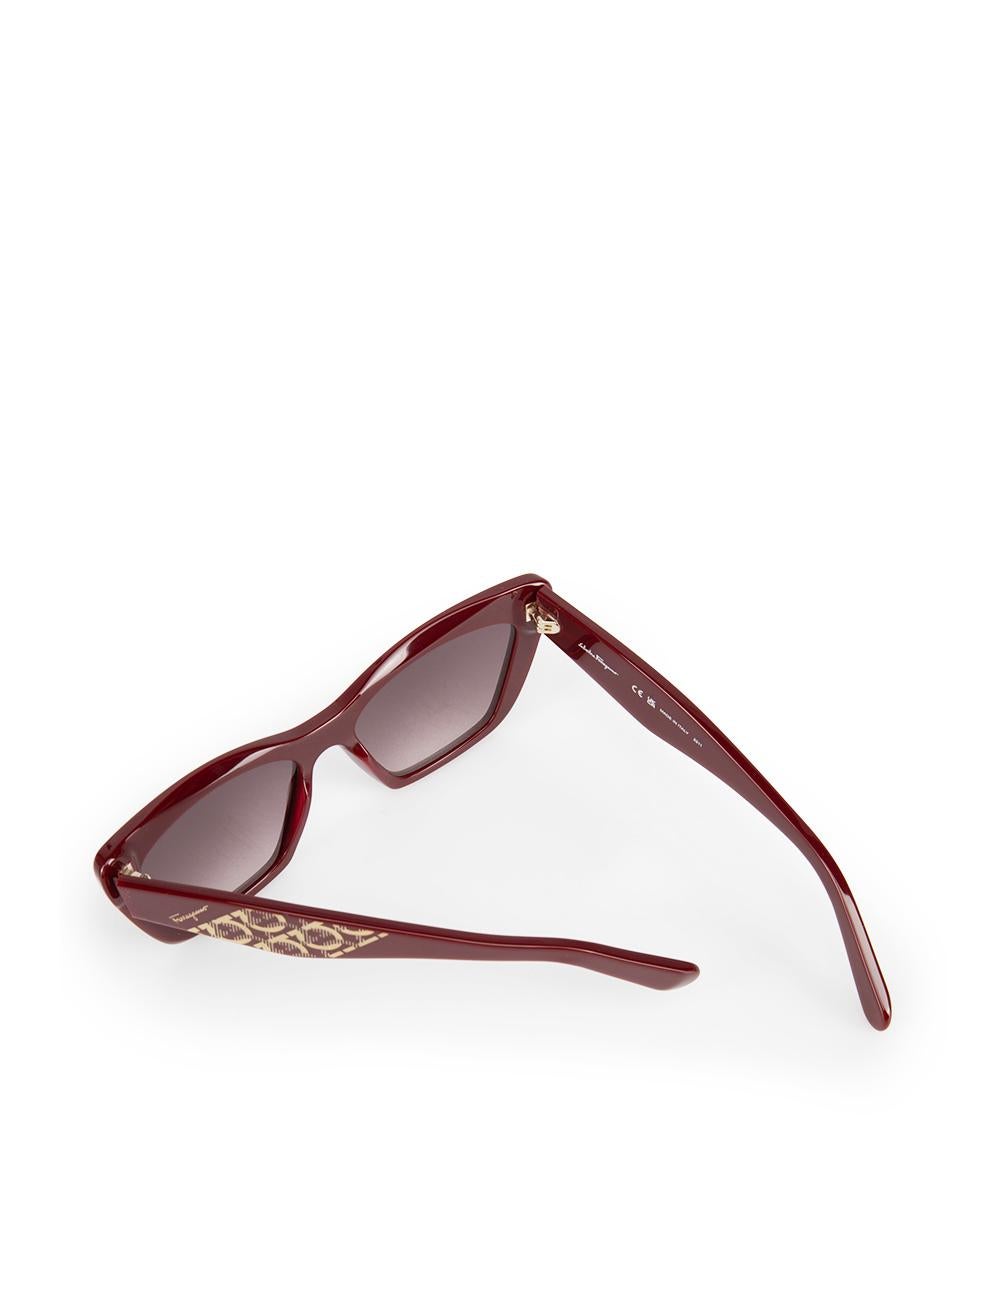 Salvatore Ferragamo Bordeaux Cat Eye Sunglasses For Sale 3